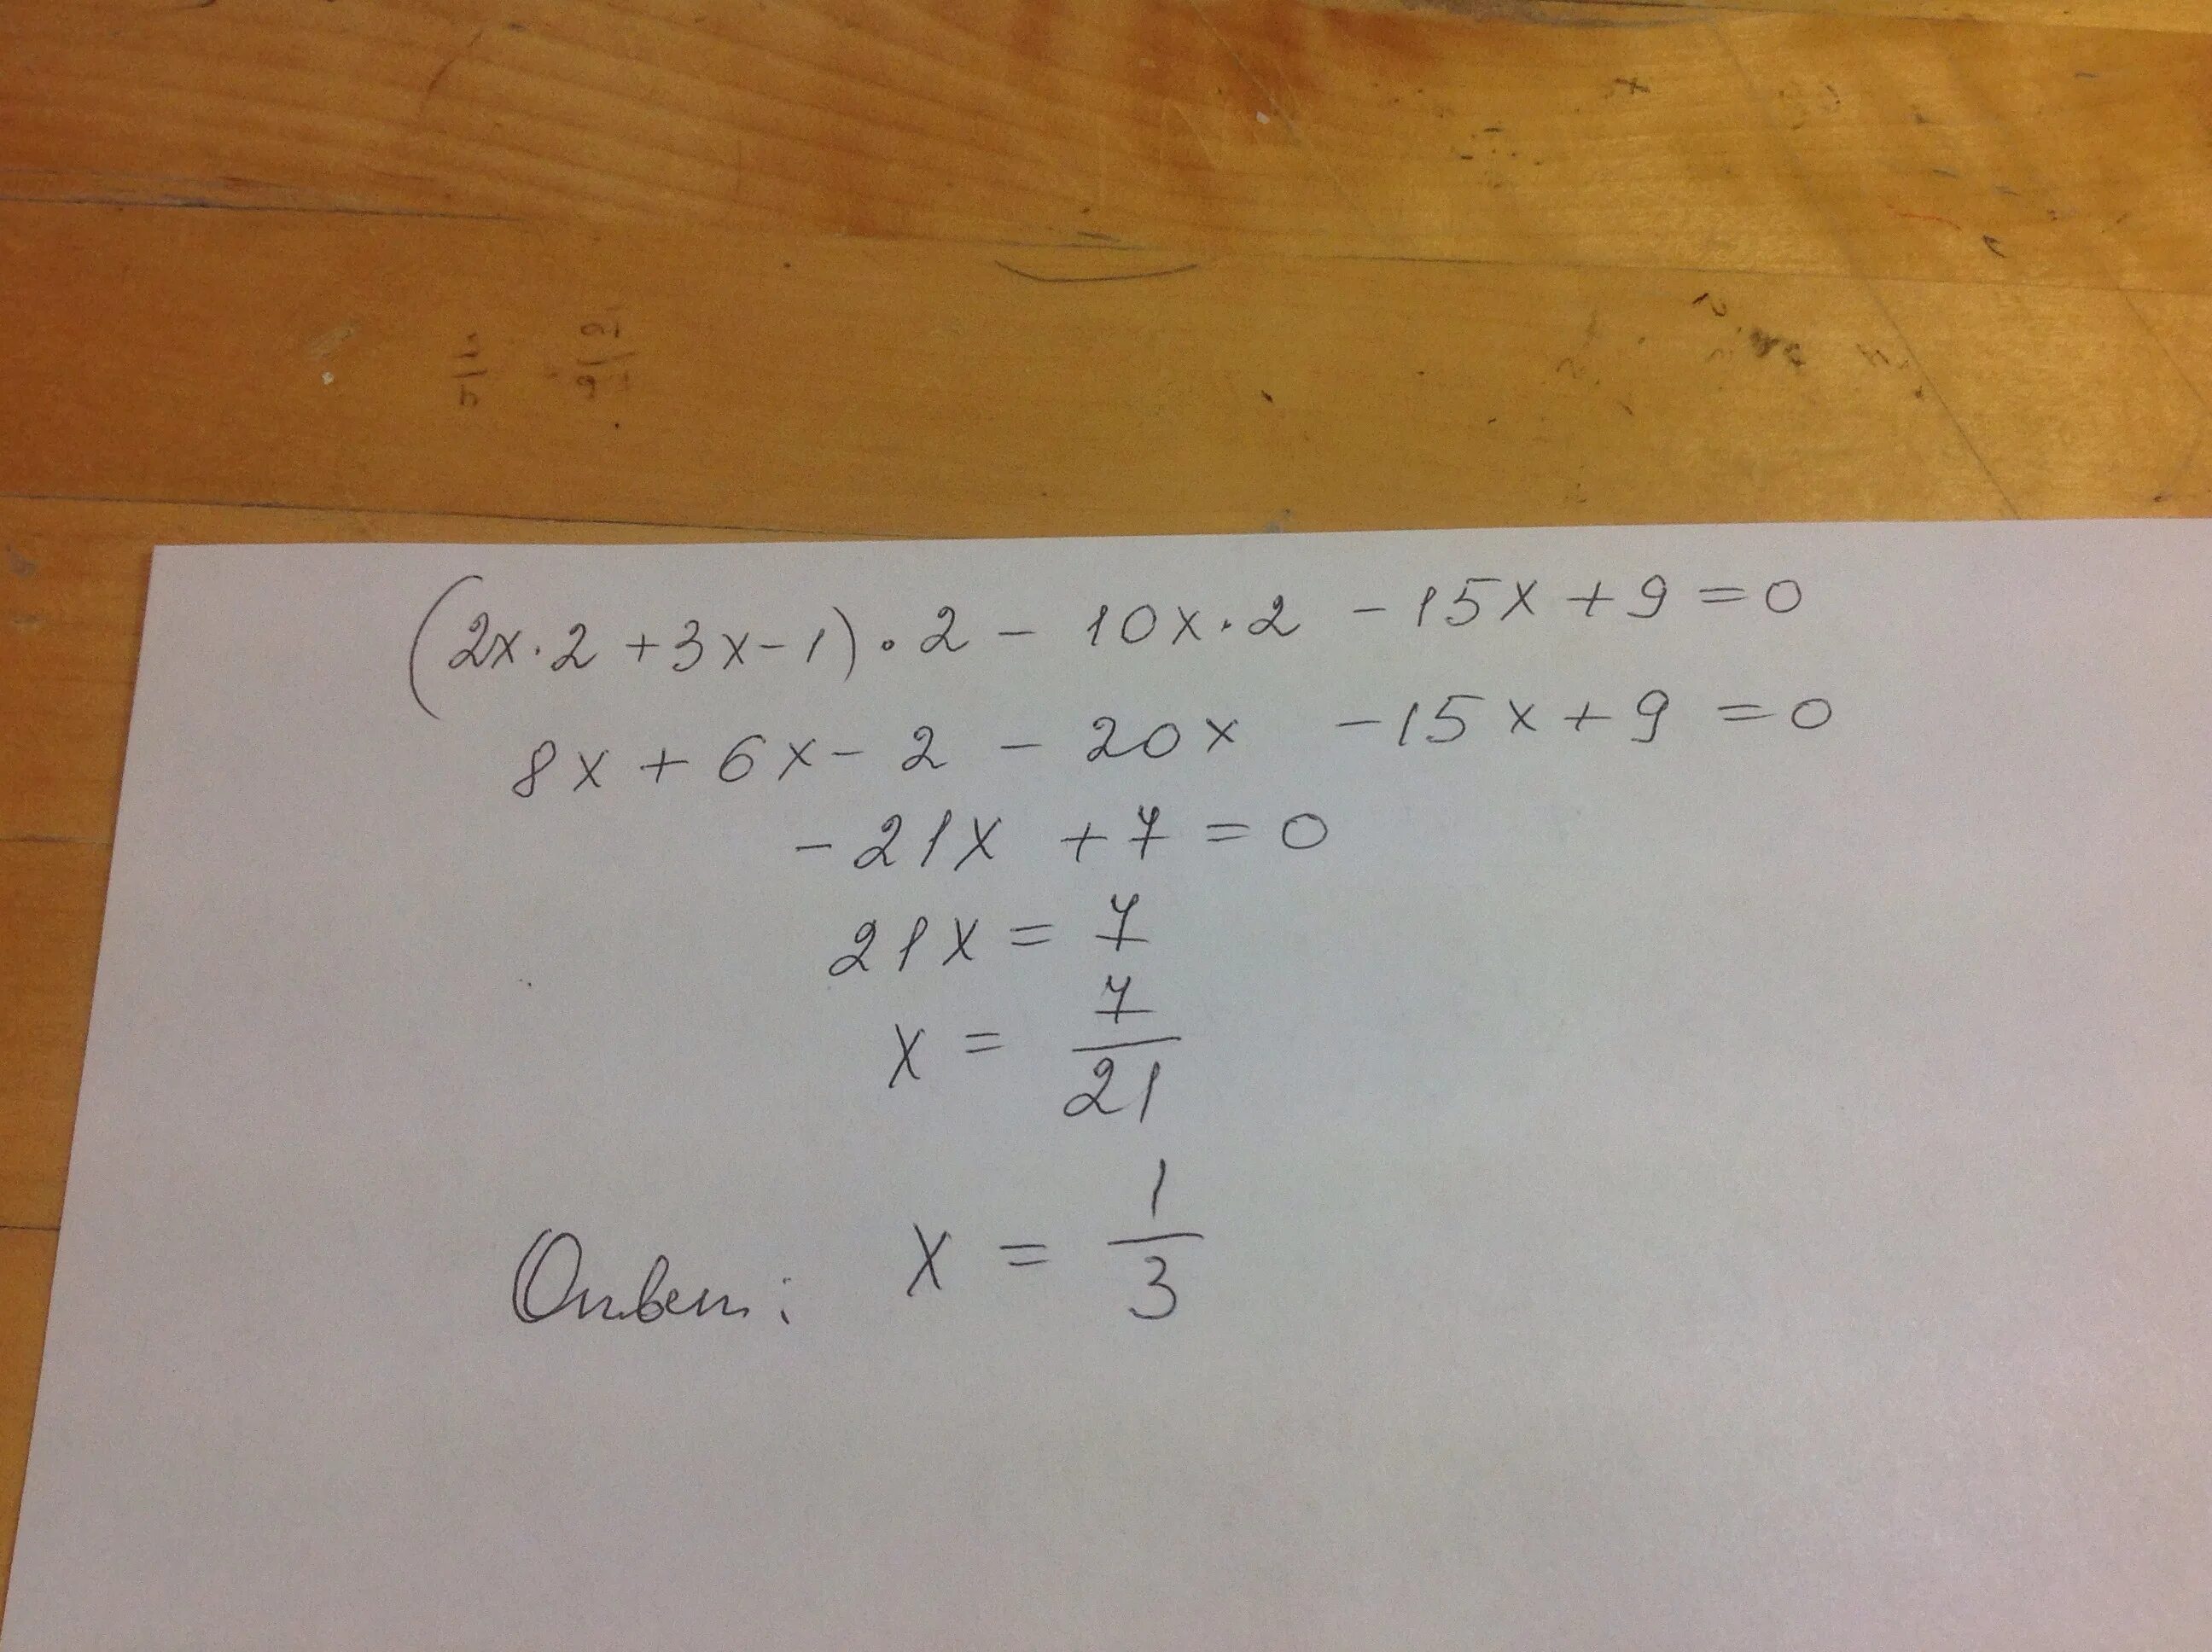 X3+2x2+2x+1. 10x 15 уравнение решении. 1/2x2-10. (X - 15) + (3x - 7) = 2(x−15)+(3x−7)=2.